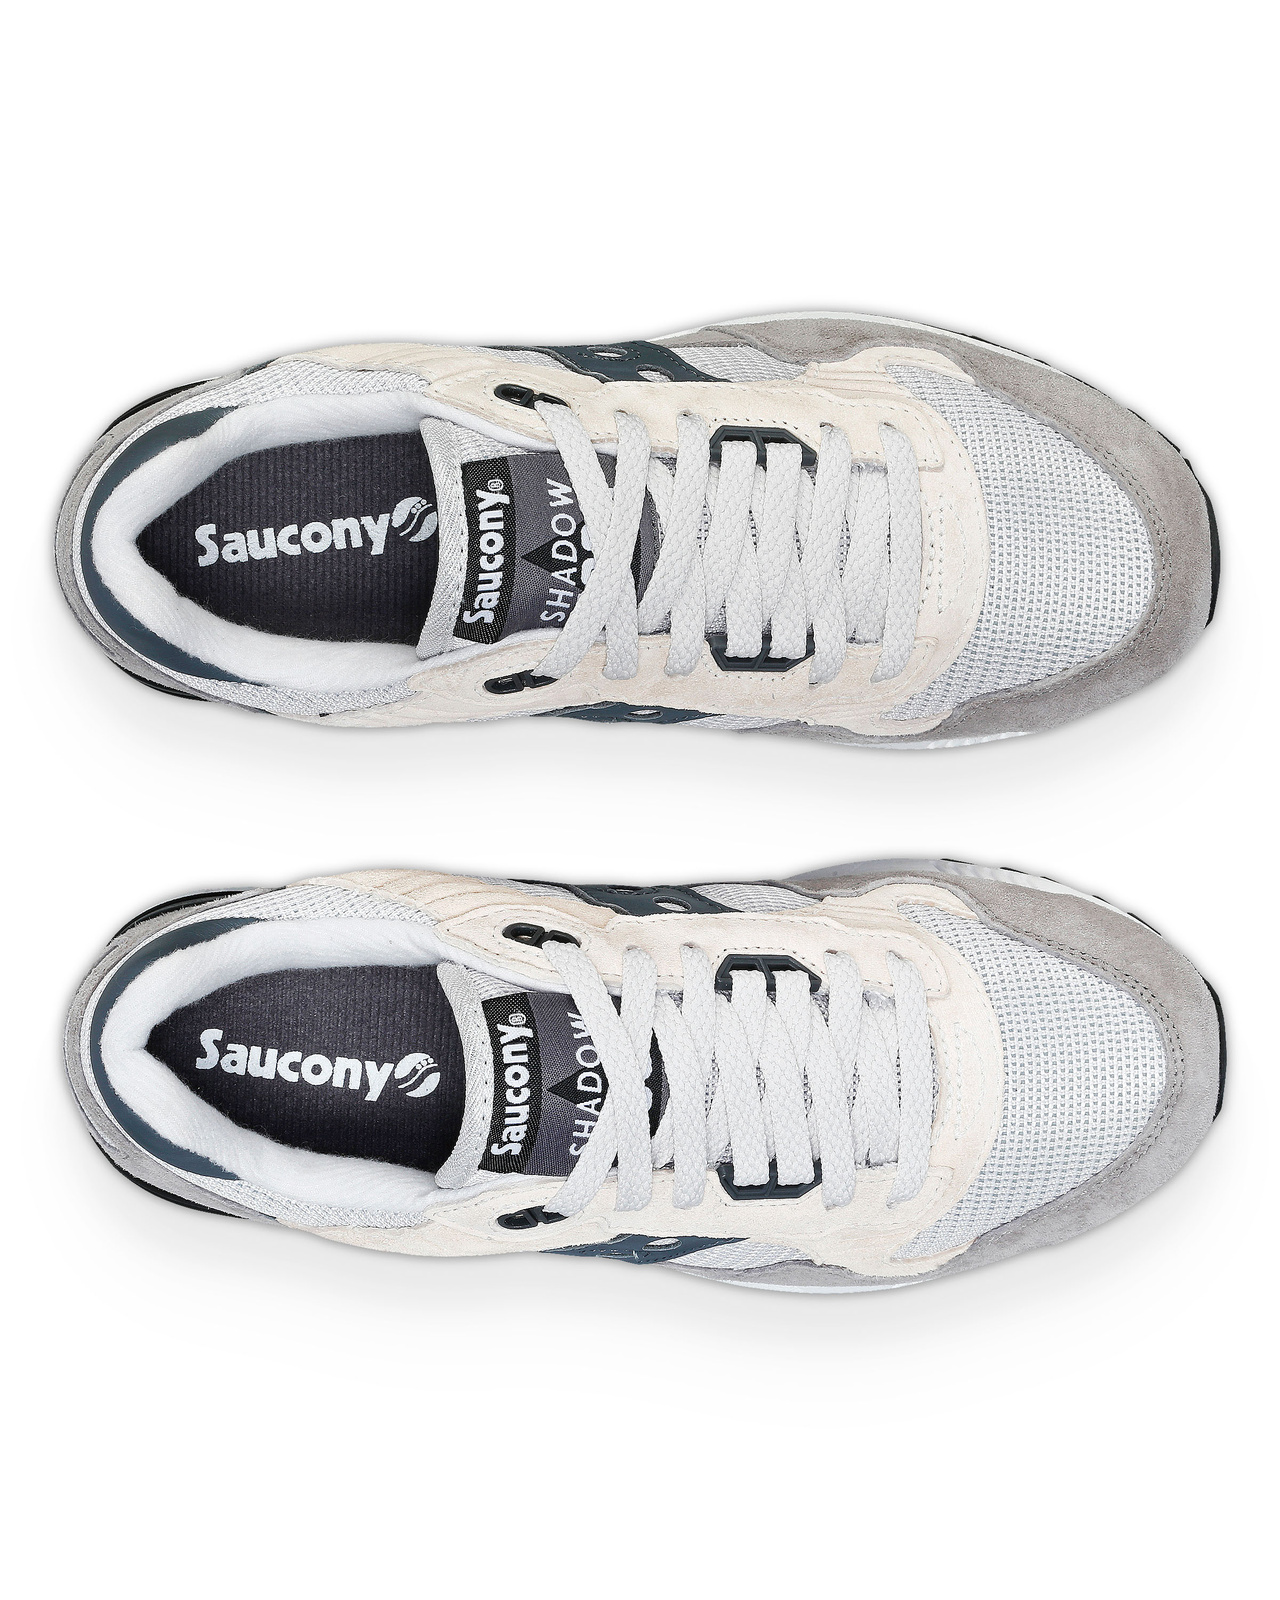 Sneaker Shadow 5000 - Grey/Dark grey - 44